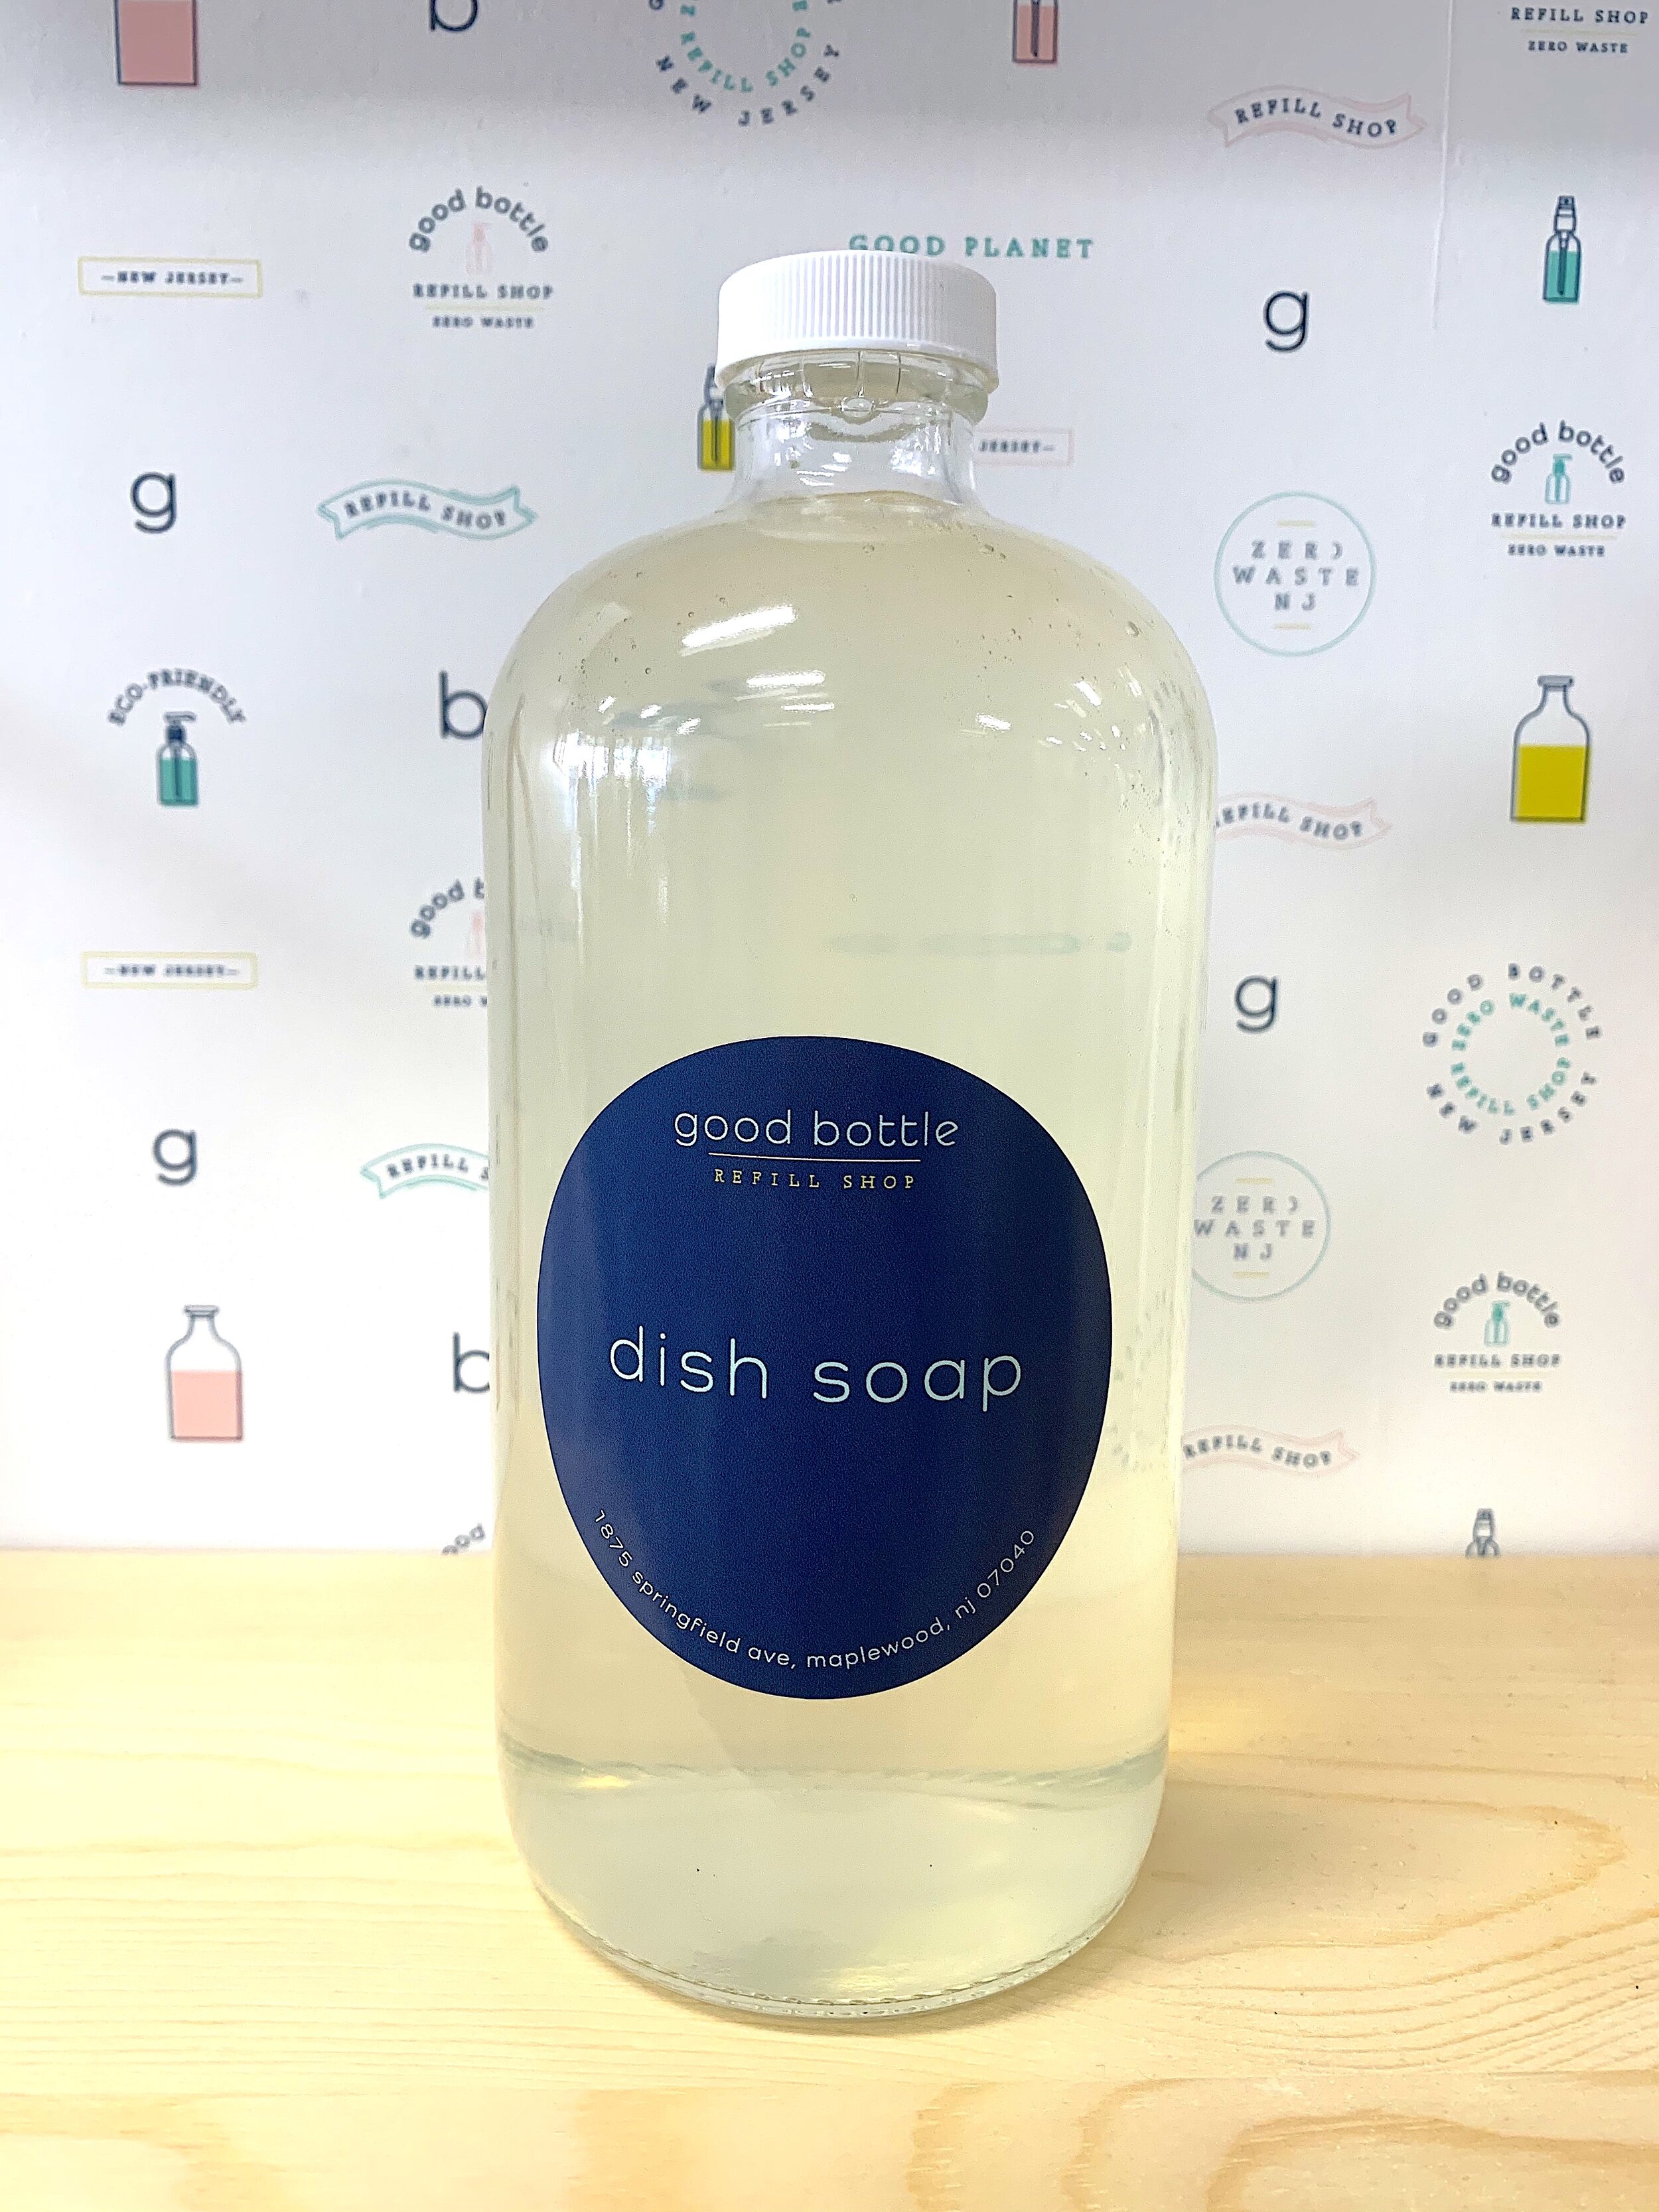 DISH BRUSH — good bottle refill shop